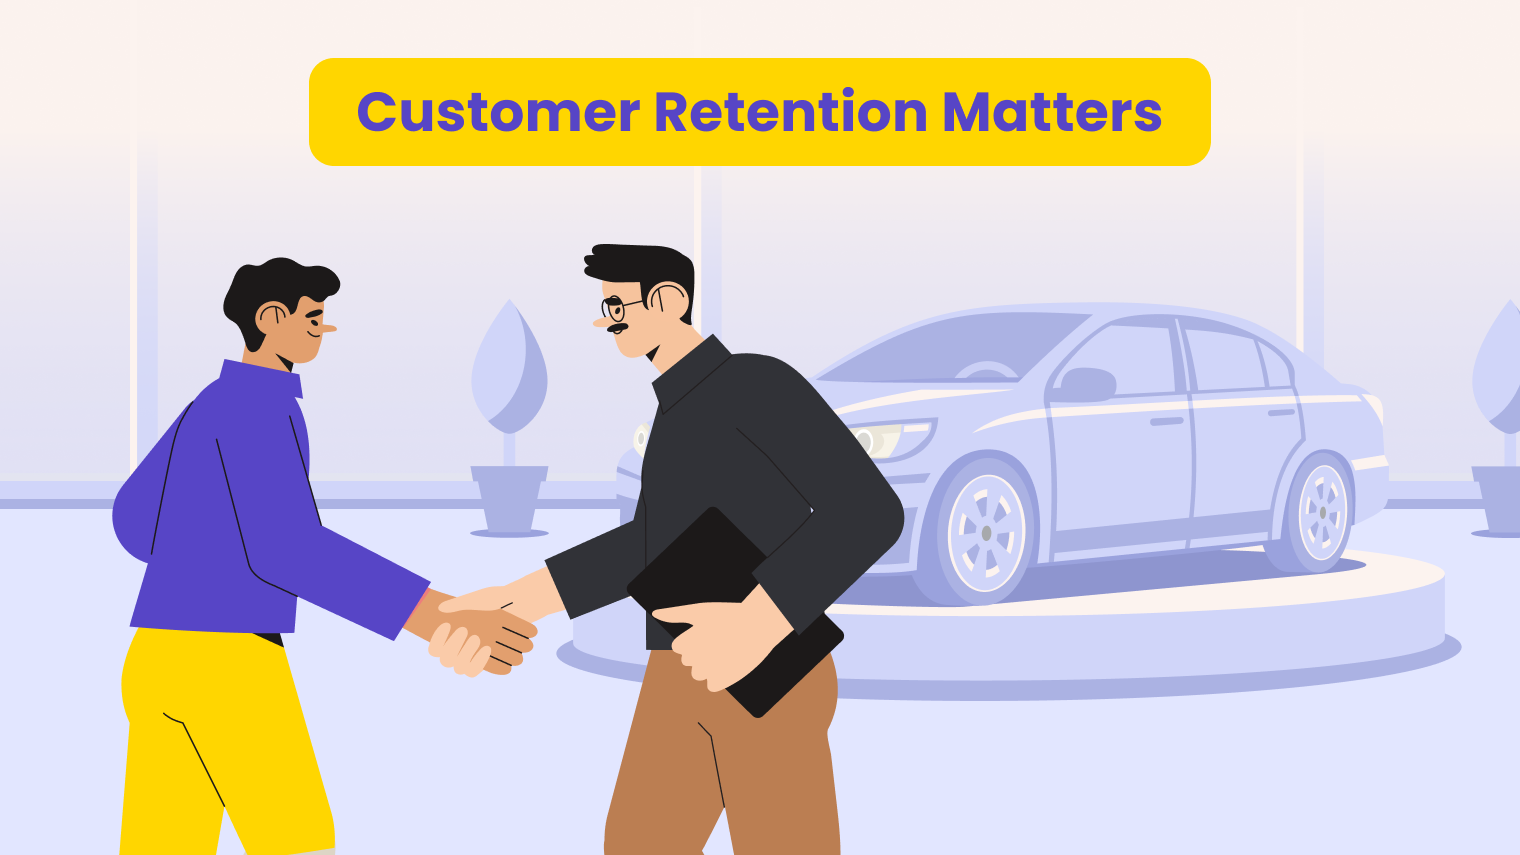 Customer Retention matters